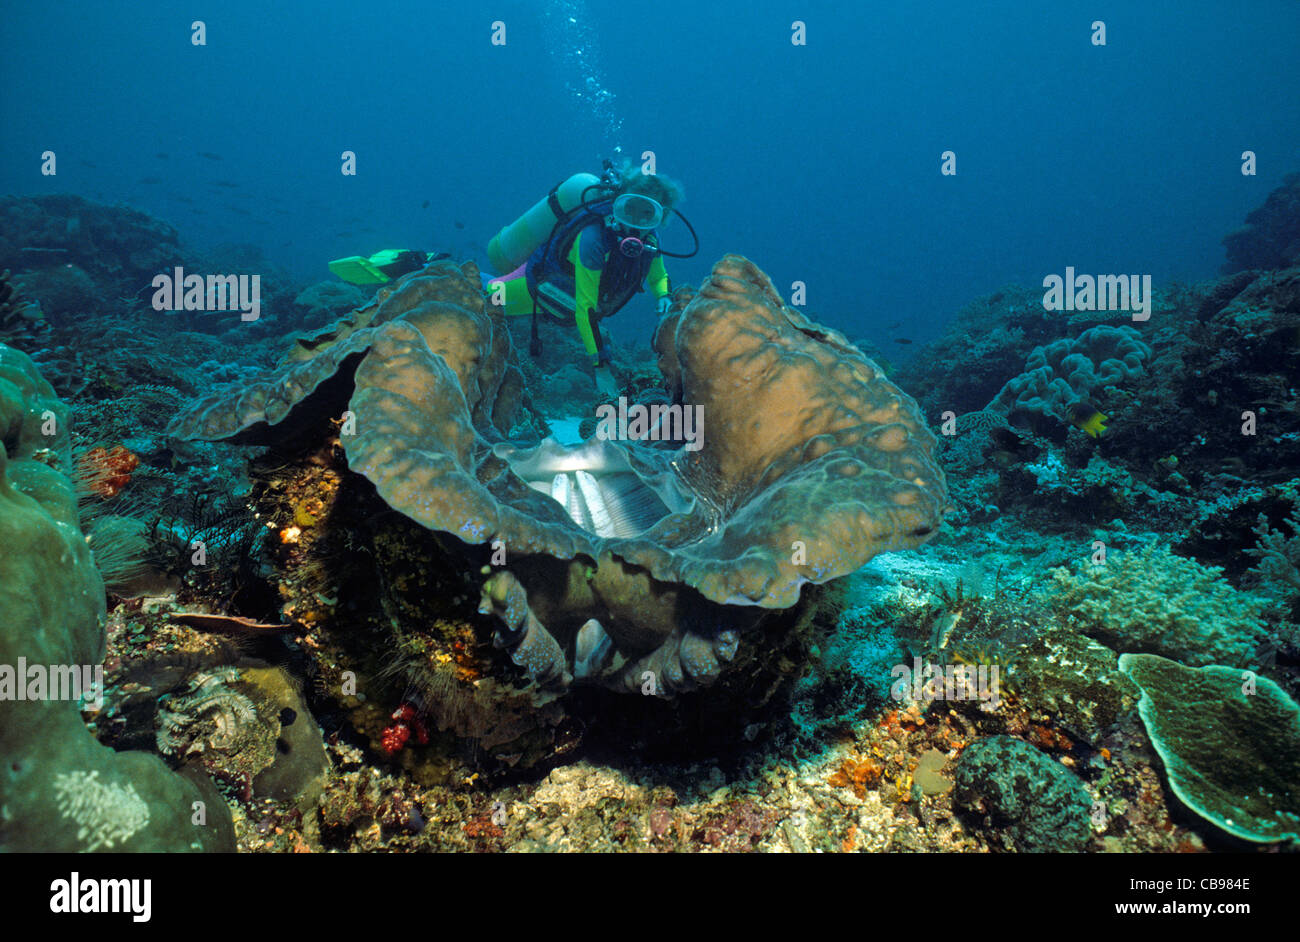 Scuba Diver en un gigante tridacna clam (Tridacna gigas), molusco bivalvo vivo más grande, Irian Jaya, Neu Guinea, Indonesia, Asia Foto de stock